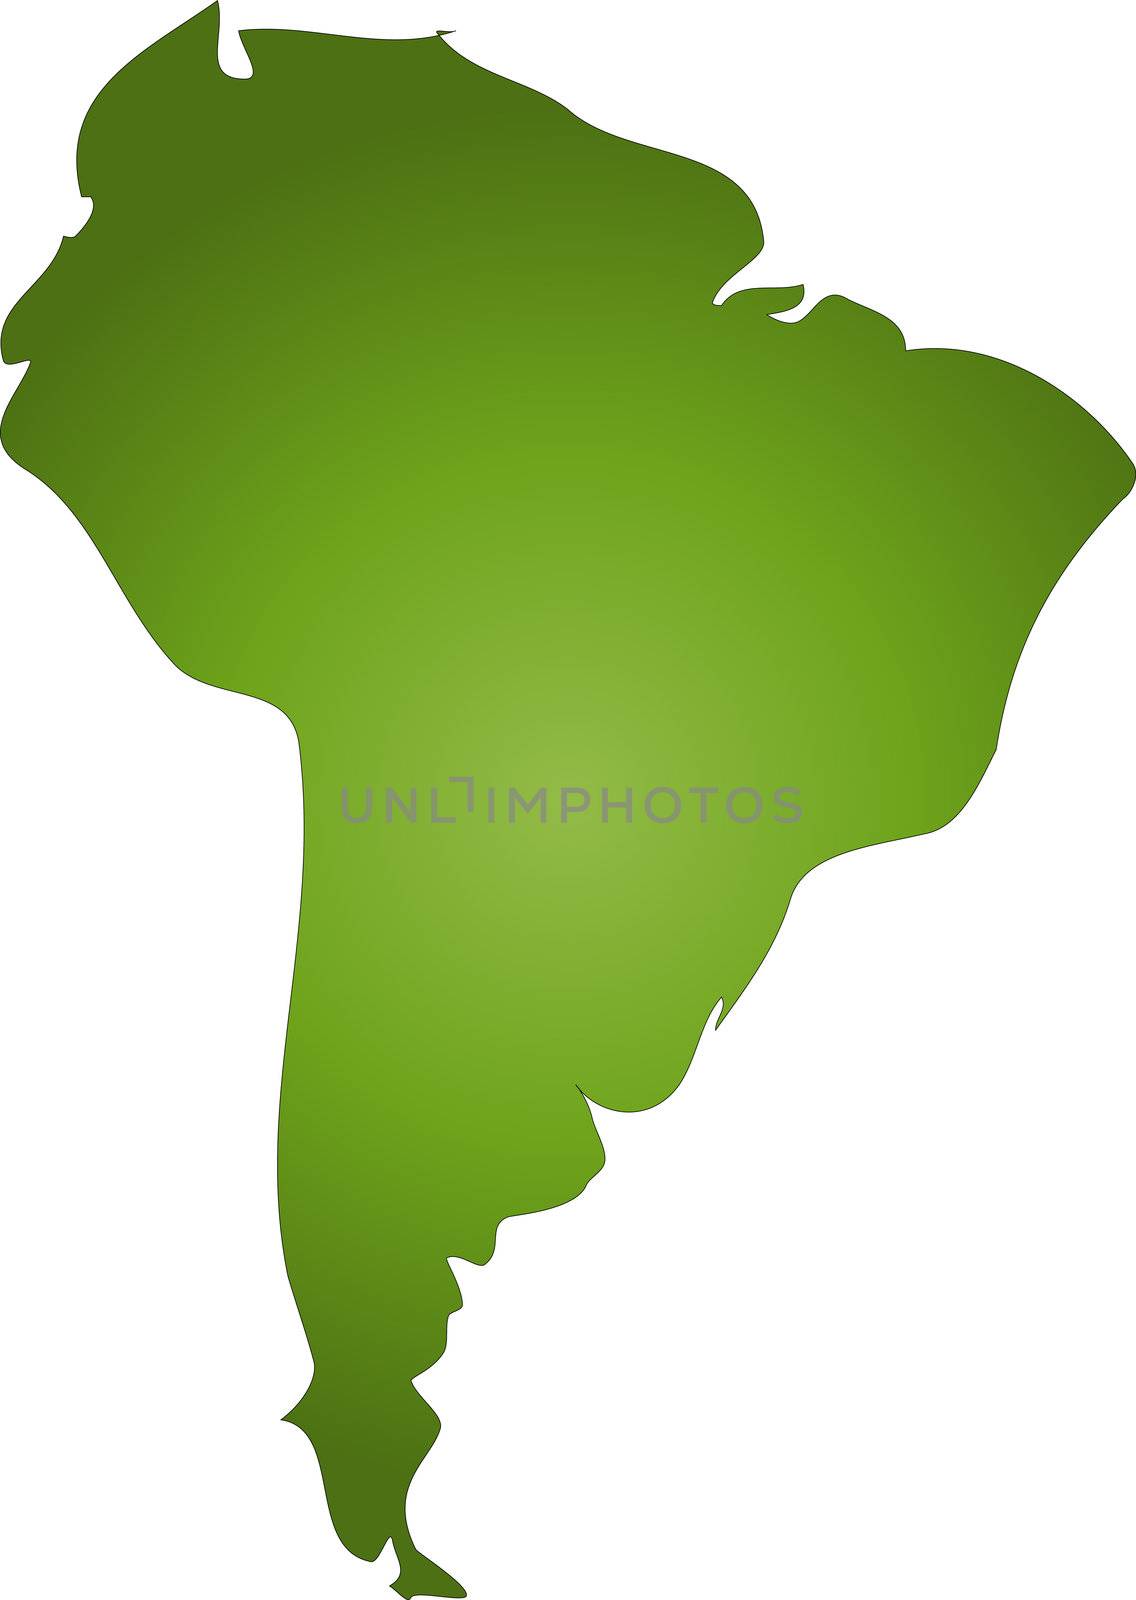 Map Of South America by kaarsten